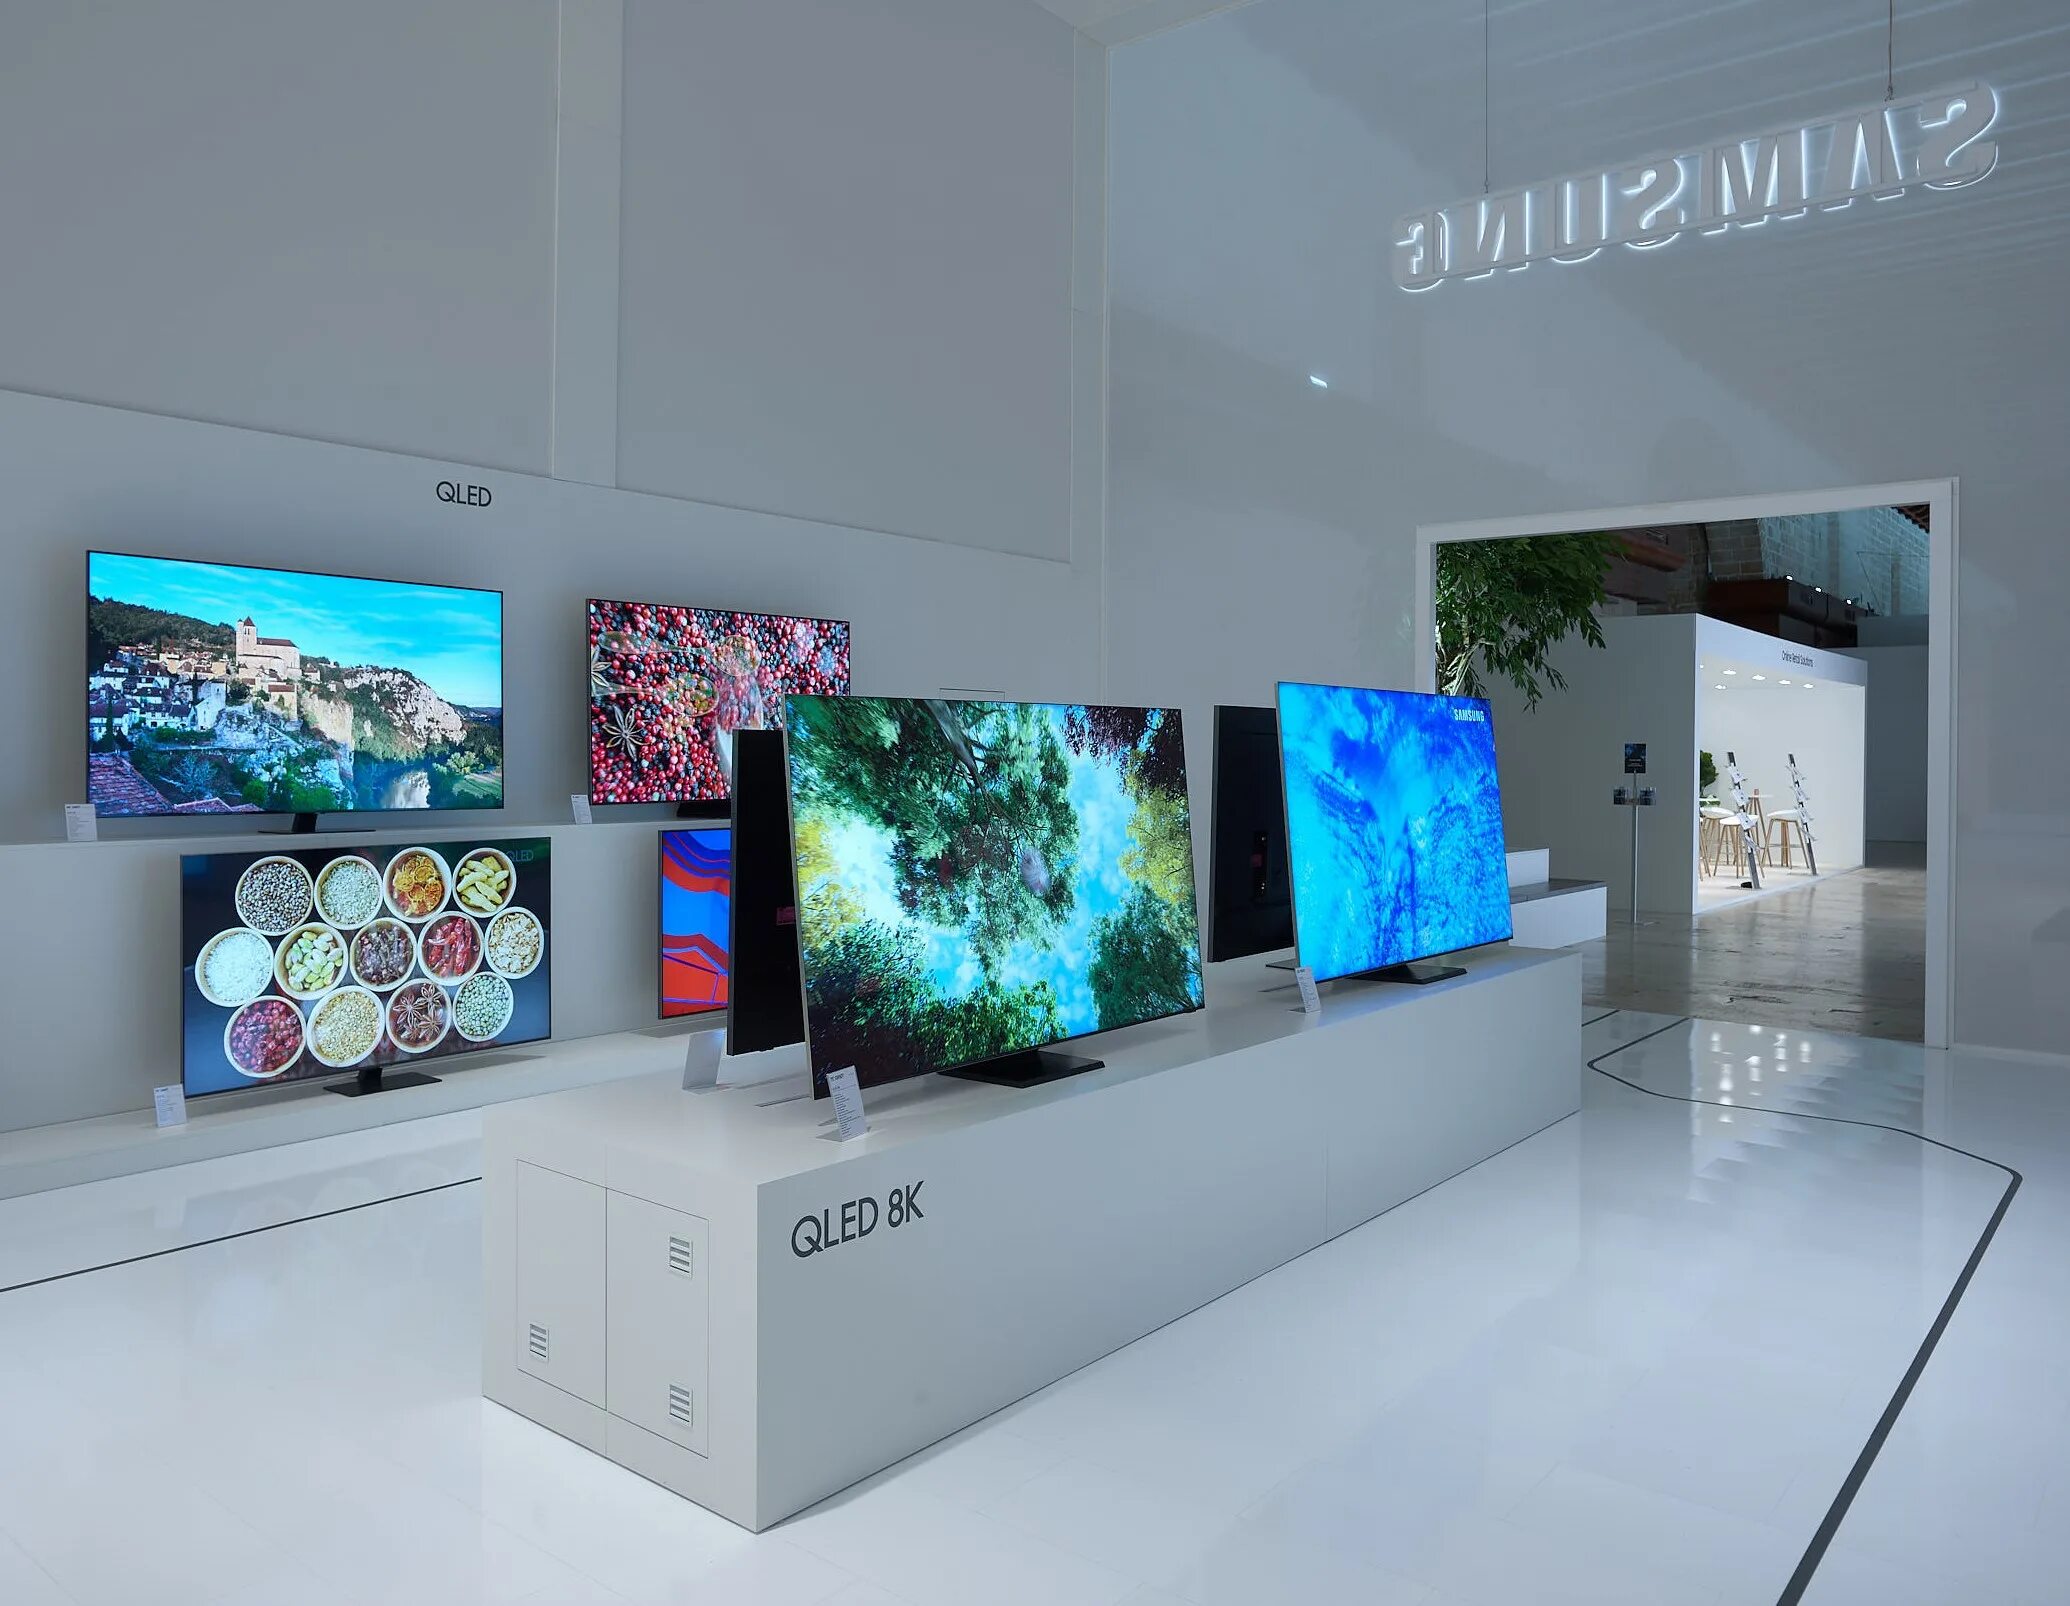 Телевизор sony samsung. Samsung QLED 8k. Телевизор Samsung QLED 8k 2020. Samsung 8k TV 2020.